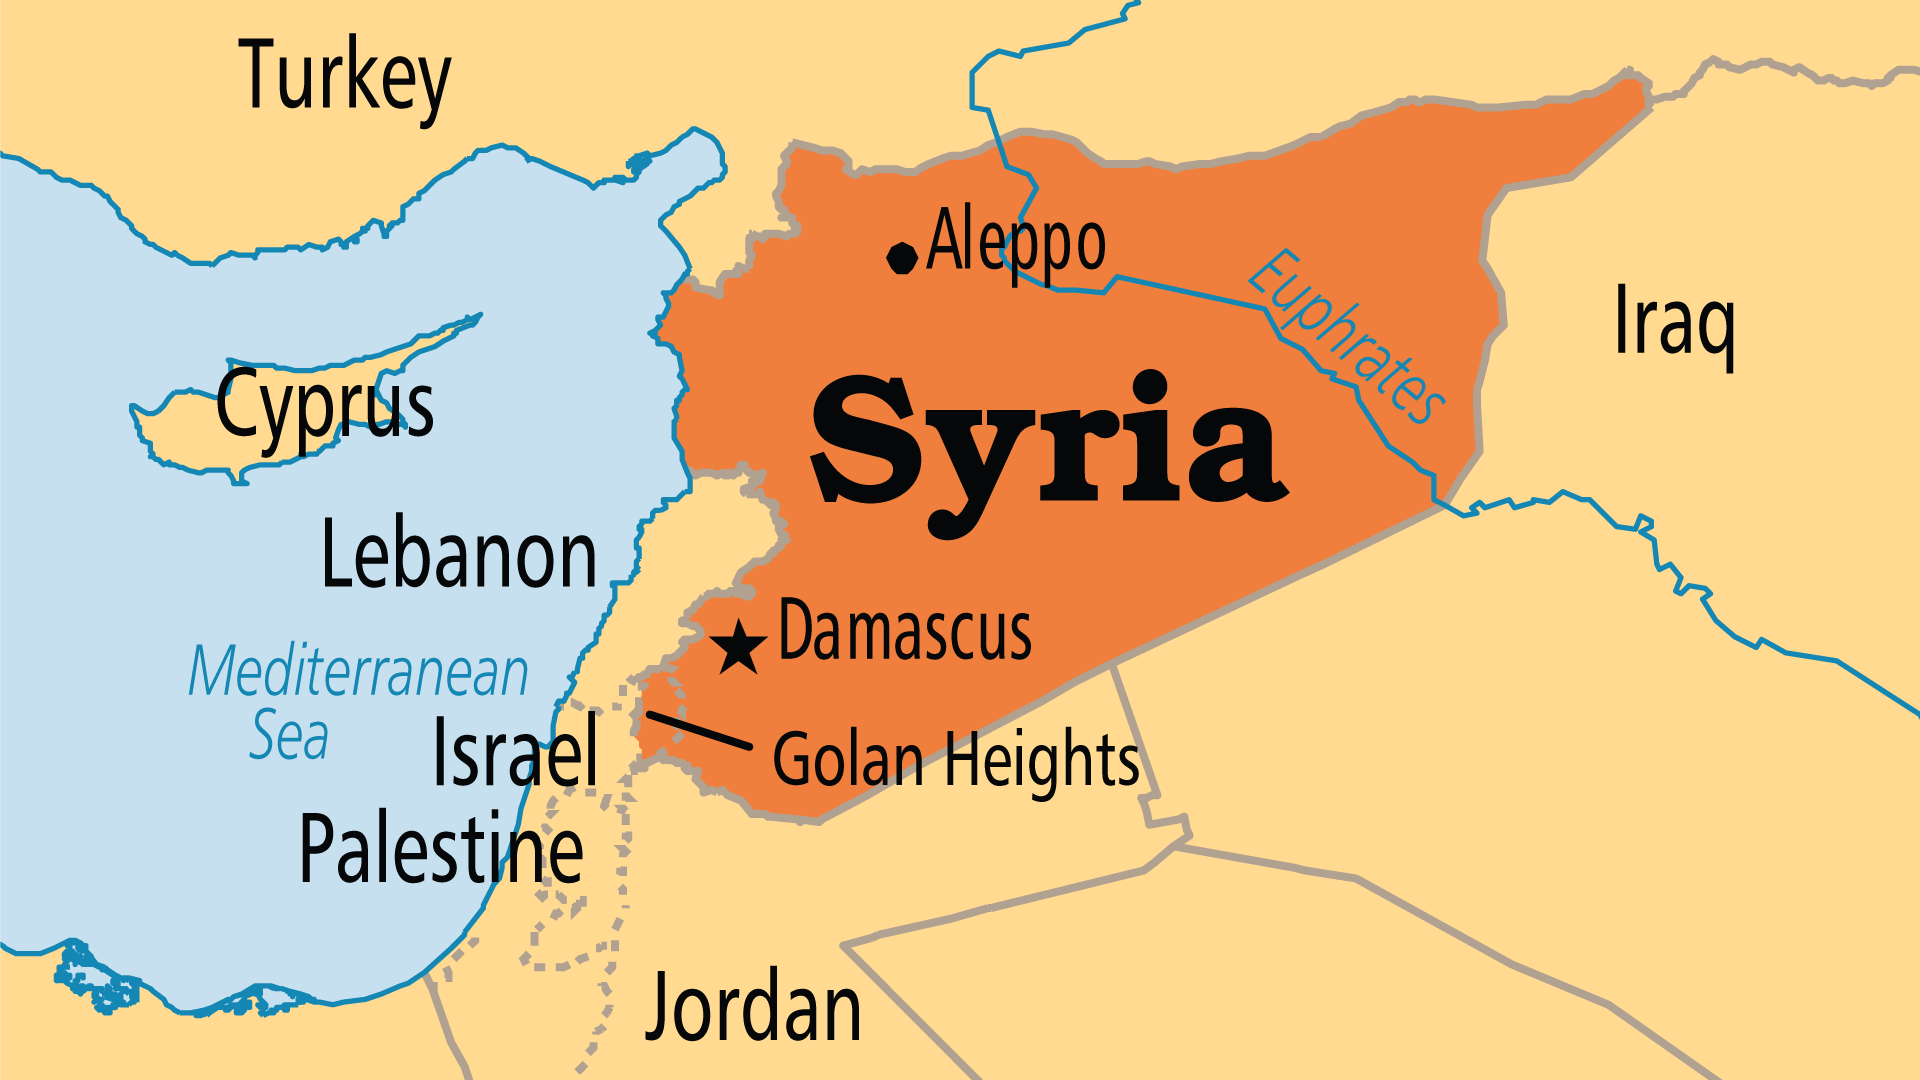 Syria (Operation World)